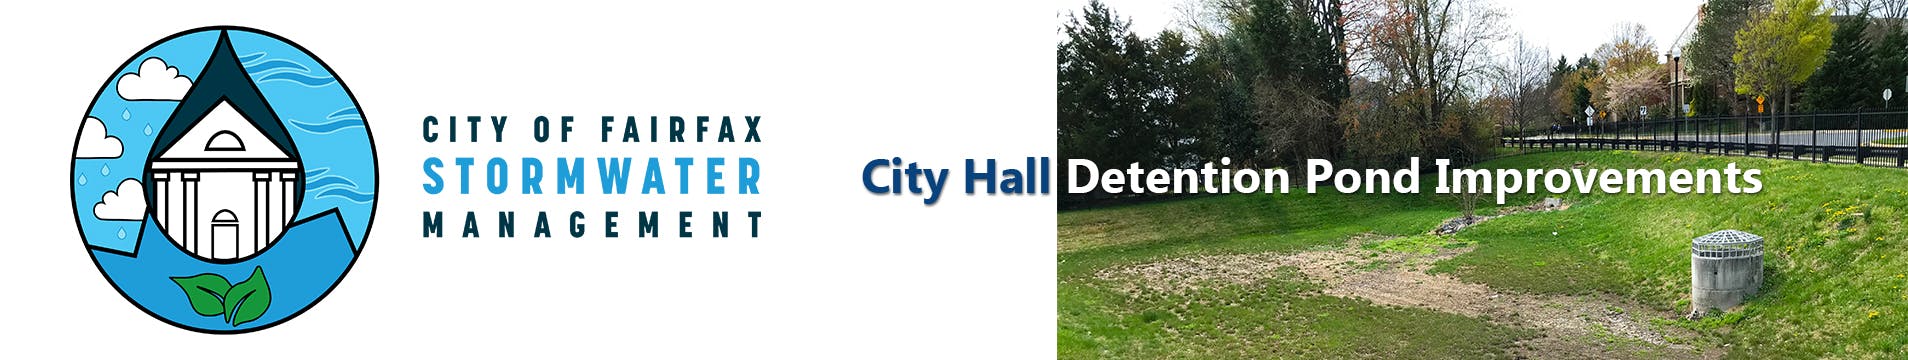 City Hall Detention Pond Improvements